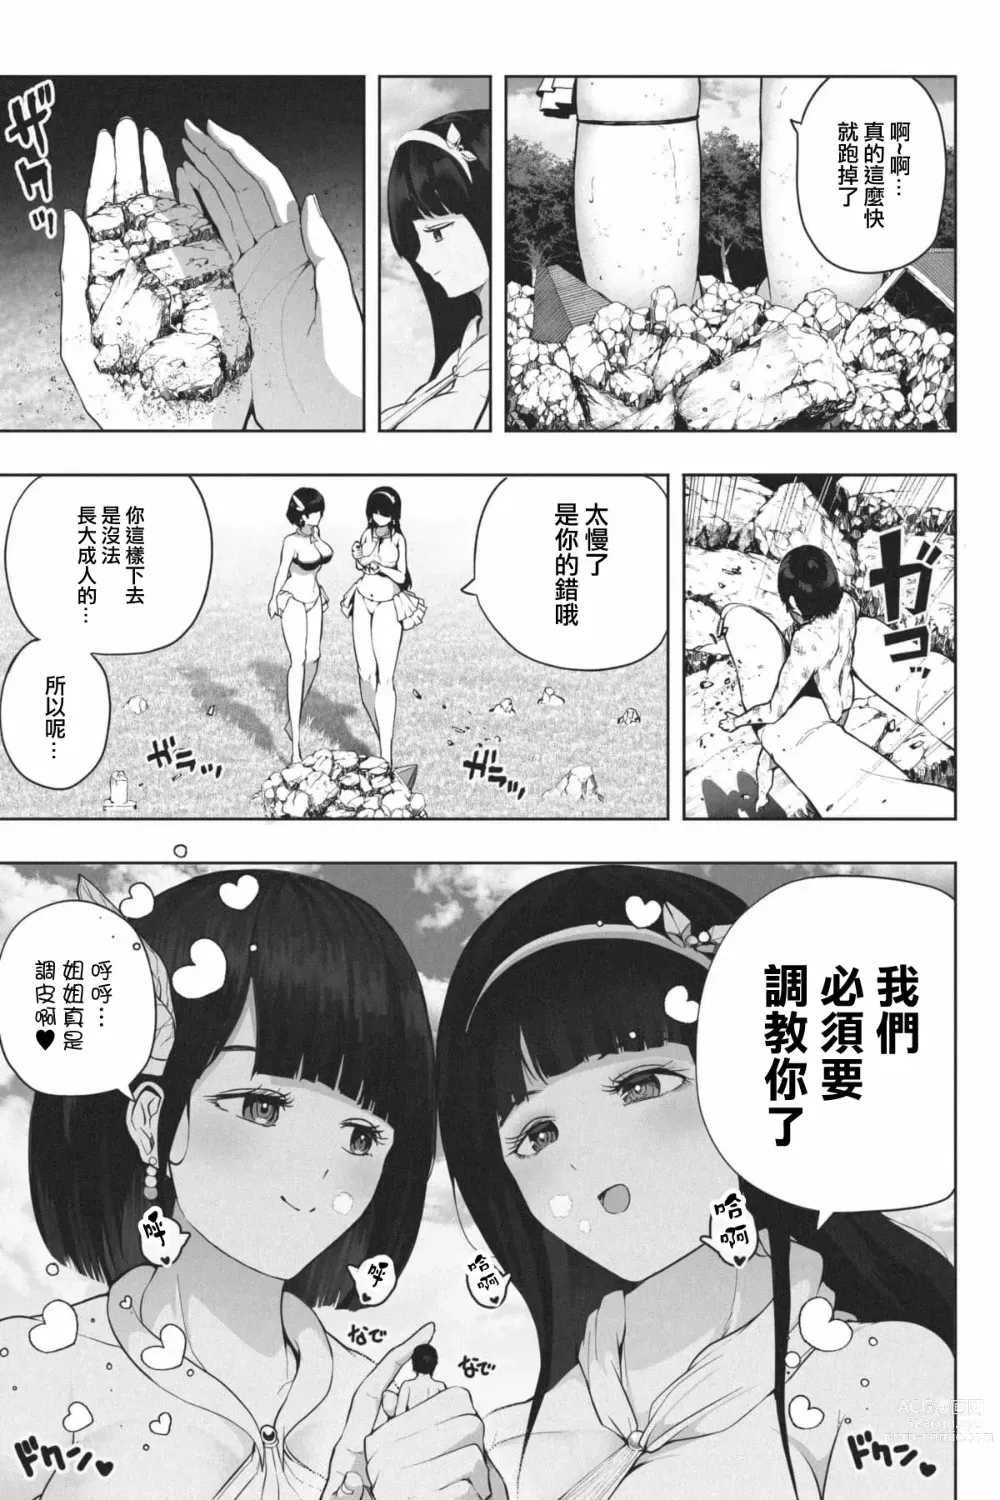 Page 17 of doujinshi 歡迎來到巨人島